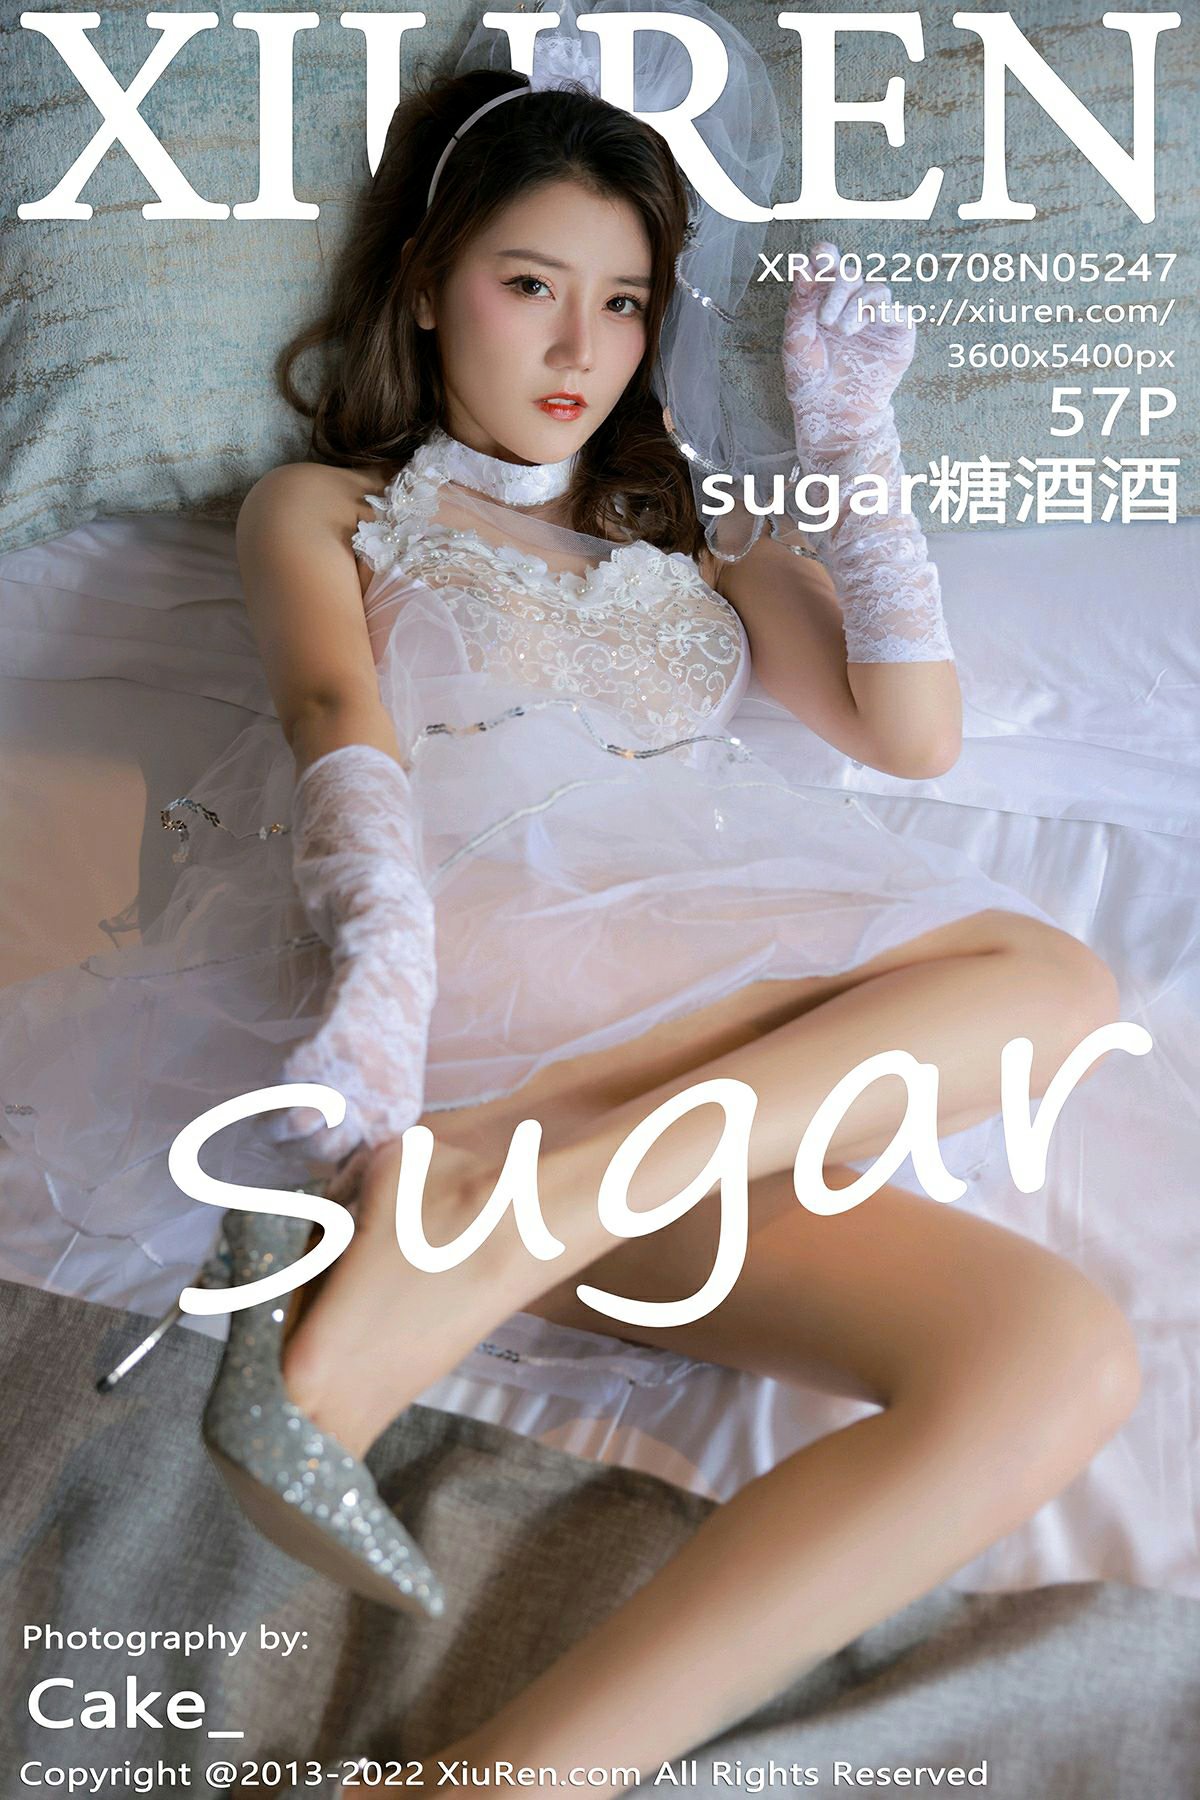 [XiuRen秀人网] 2022.07.08 No.5247 sugar糖酒酒 [57P558MB]